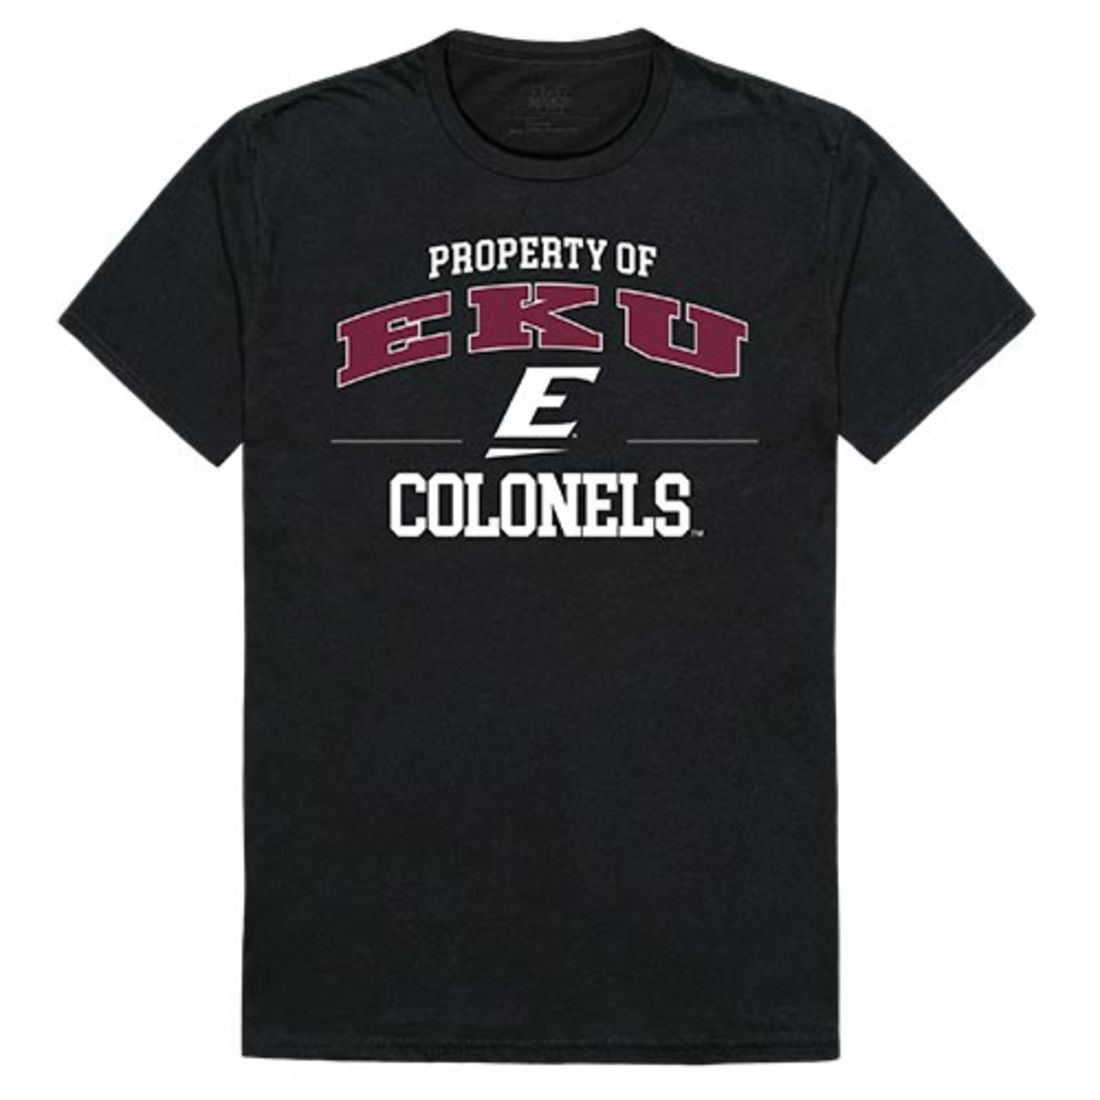 EKU Eastern Kentucky University Colonels Property T-Shirt Black-Campus-Wardrobe